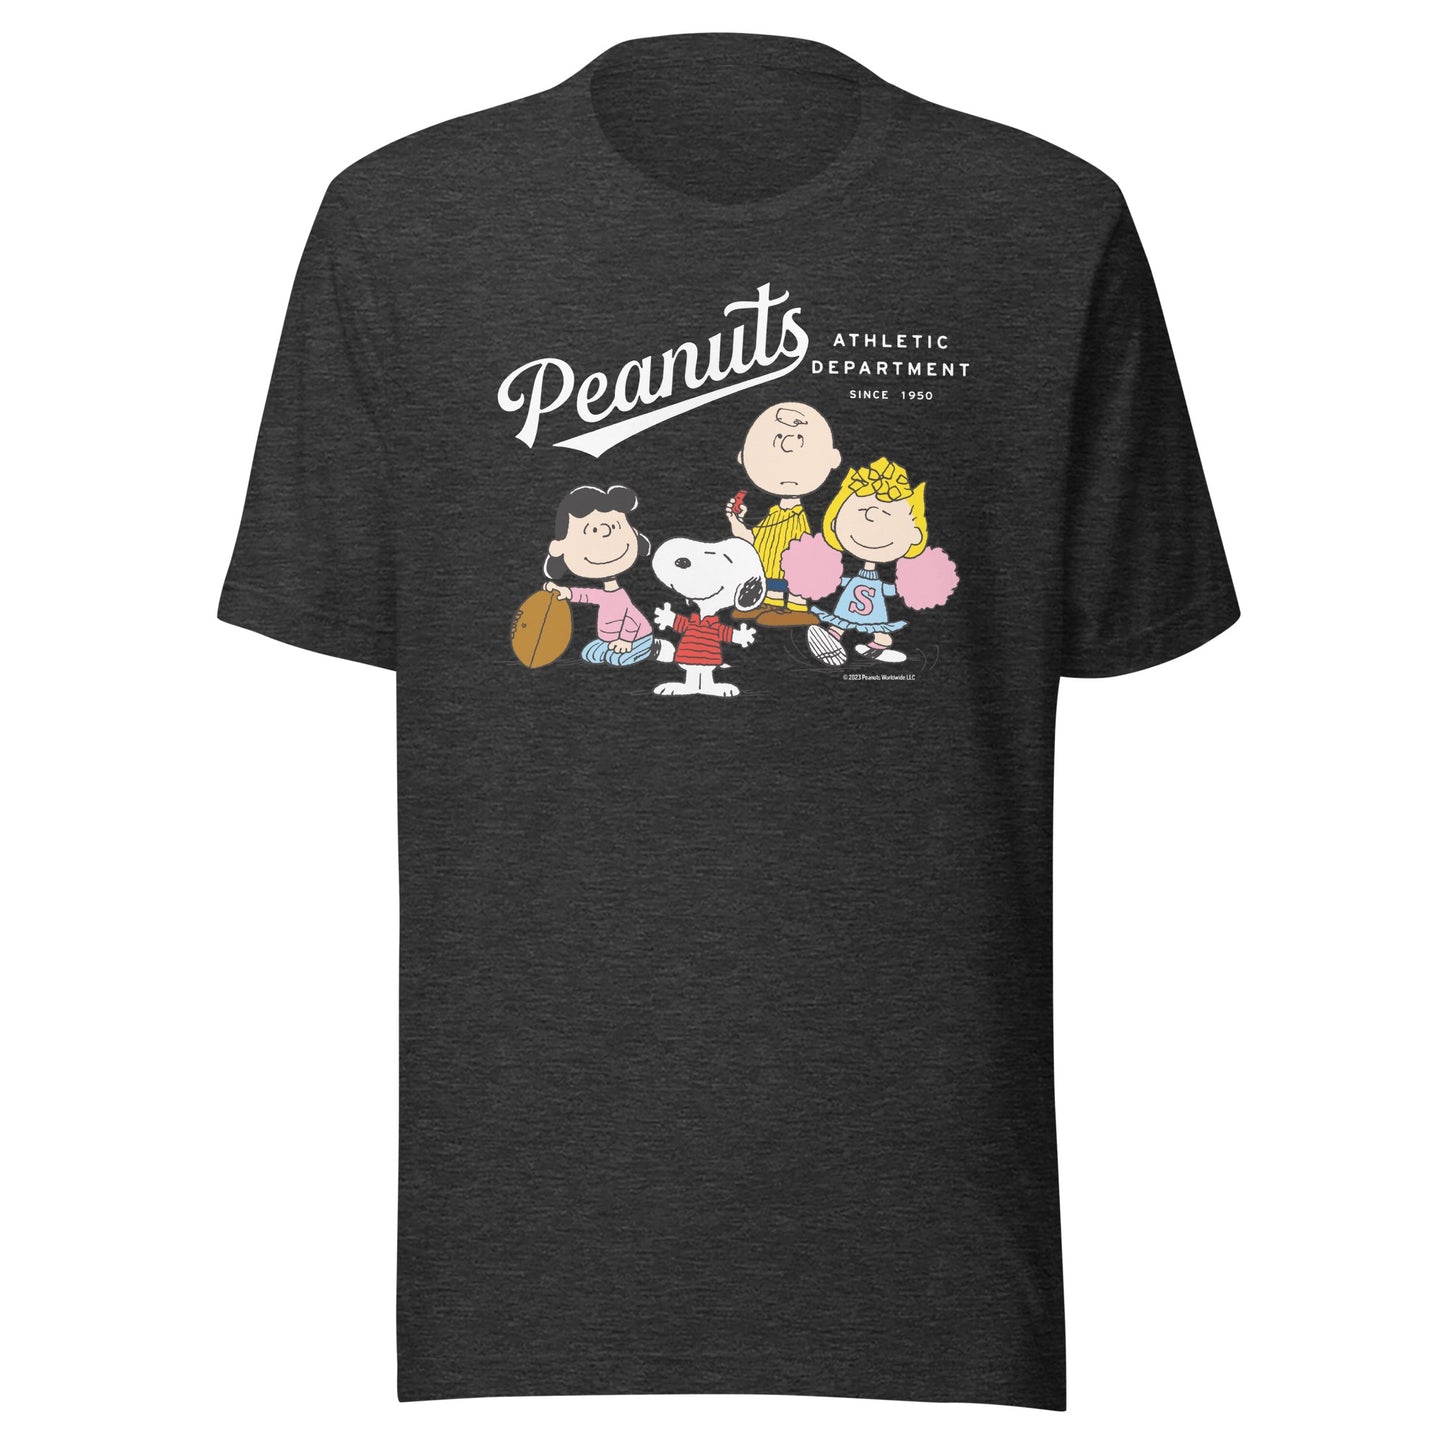 Peanuts Gang Athletic Department Adult T-Shirt